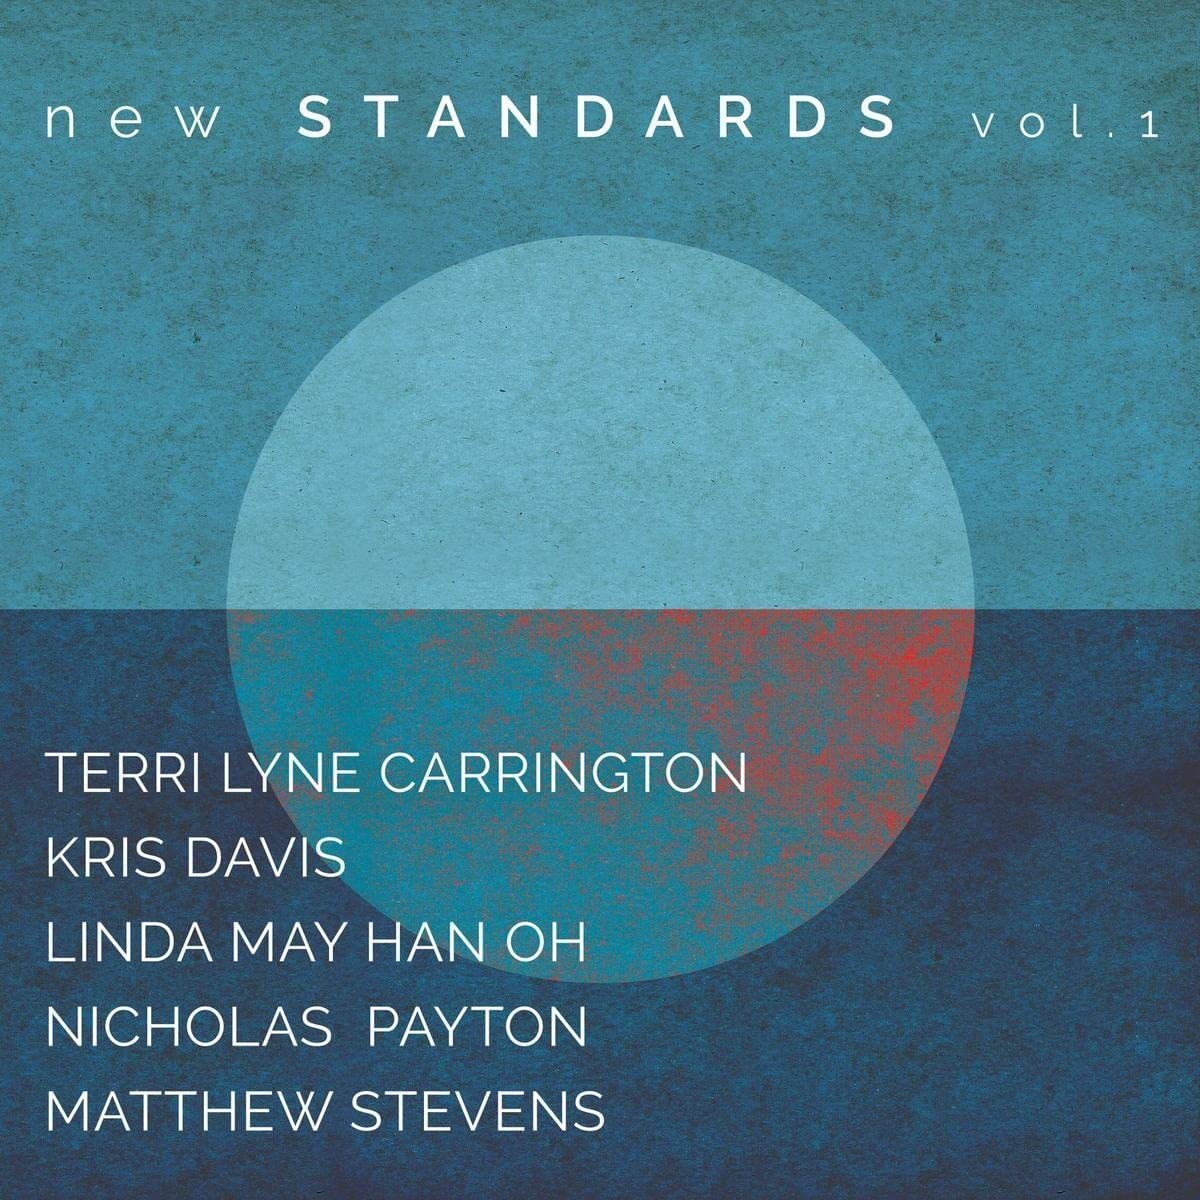 TERRI LYNE CARRINGTON - New Standards Vol. 1 cover 